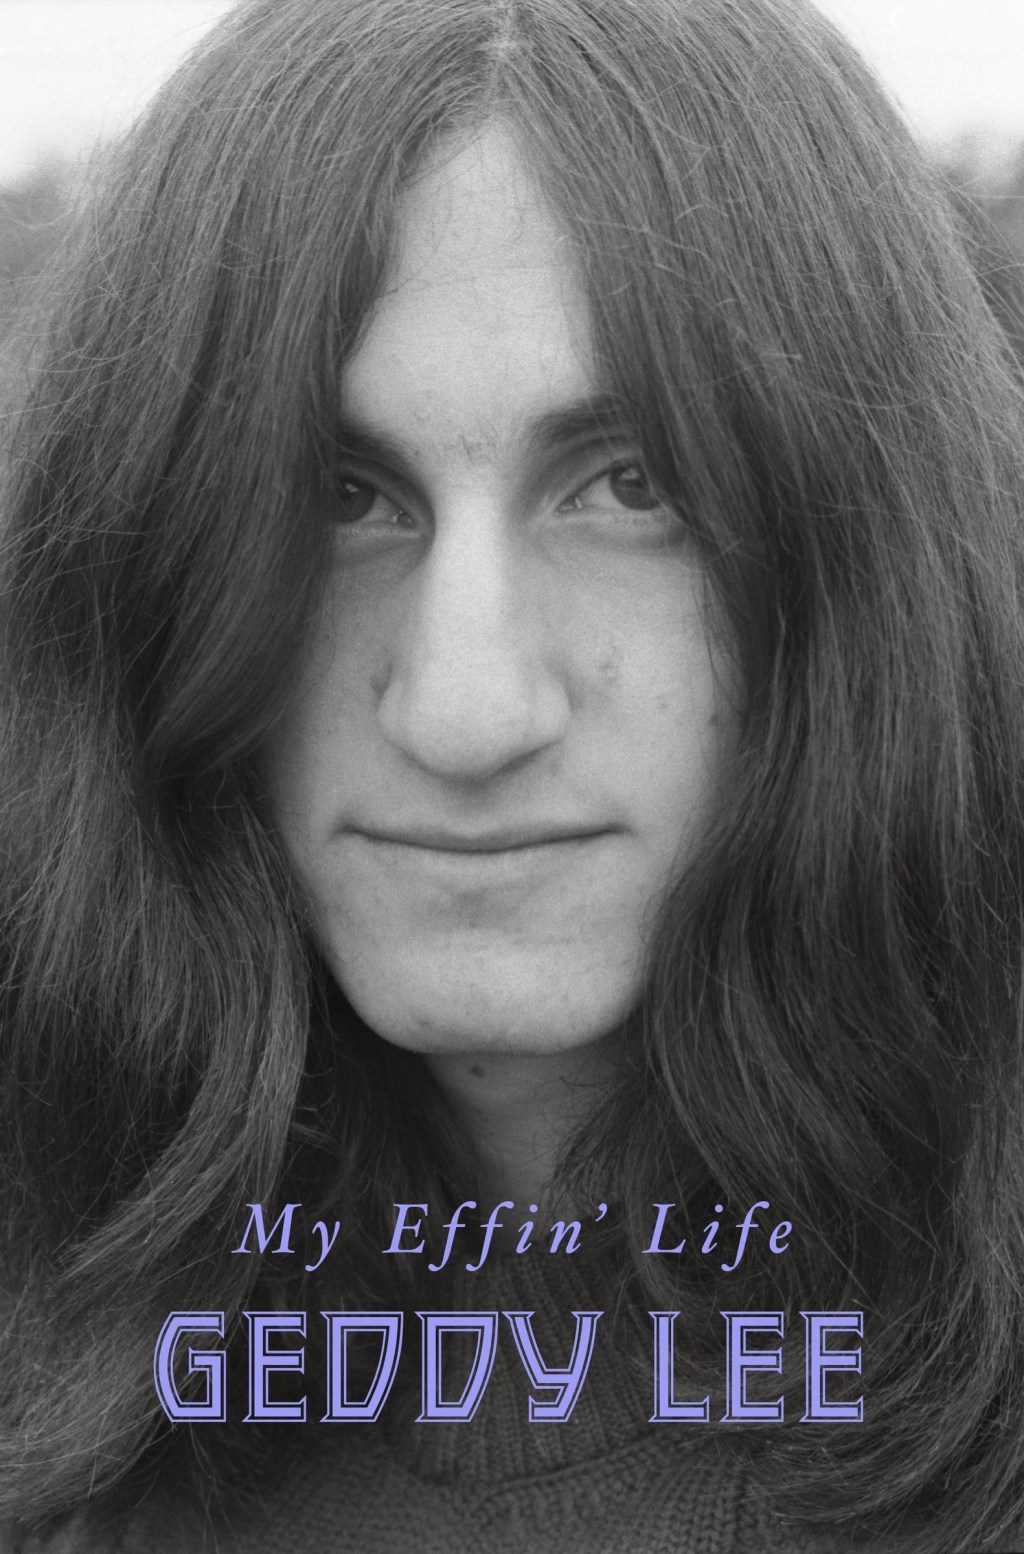 Capa da autobiografia de Geddy Lee, 'My Effin' Life'